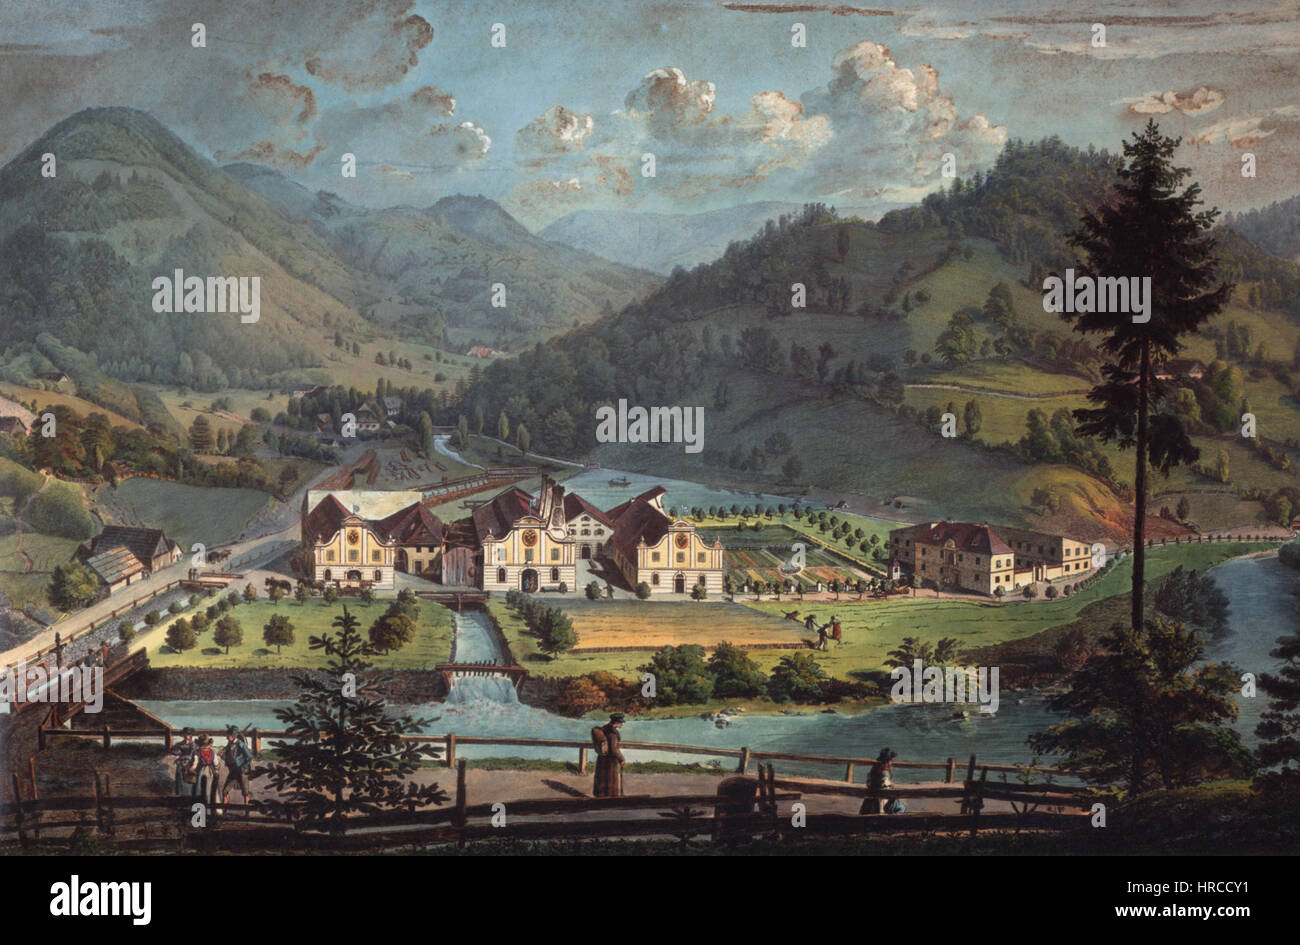 Scheibbs Toepperfabrik 1827 by Franz Barbarini Stock Photo